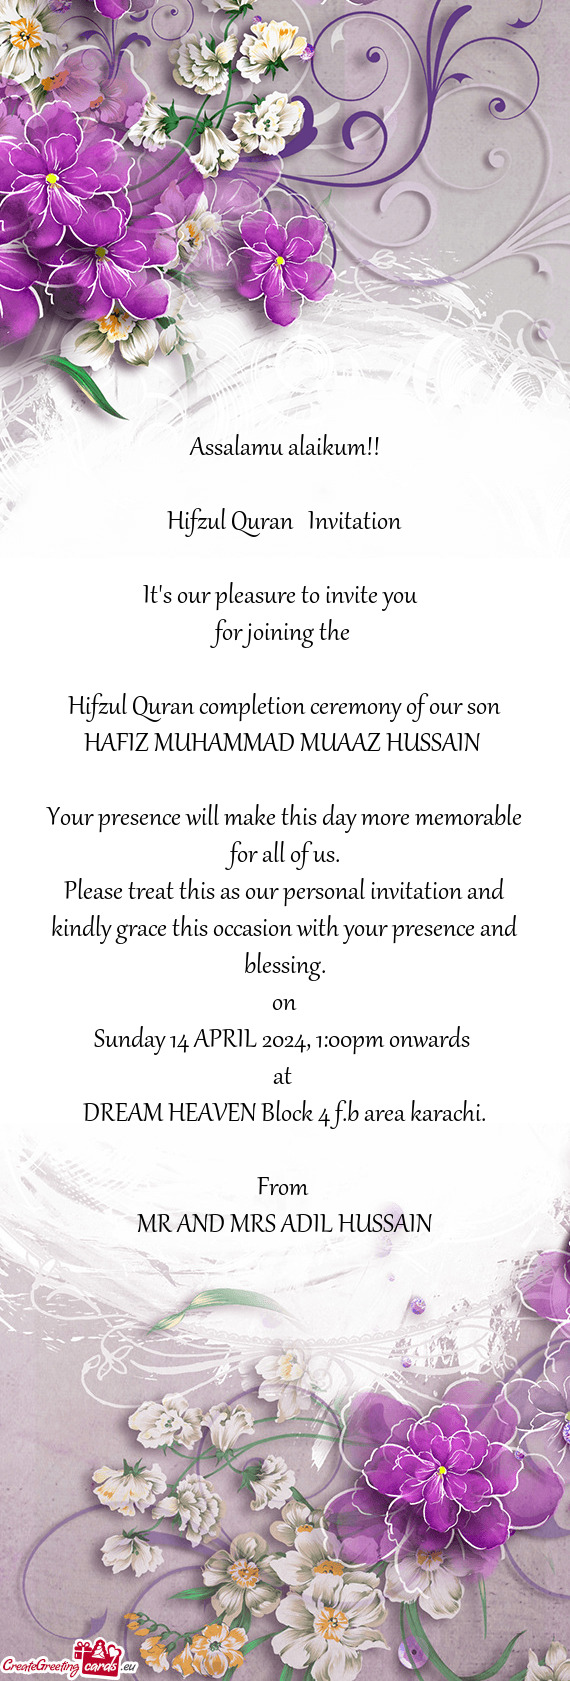 Hifzul Quran completion ceremony of our son HAFIZ MUHAMMAD MUAAZ HUSSAIN